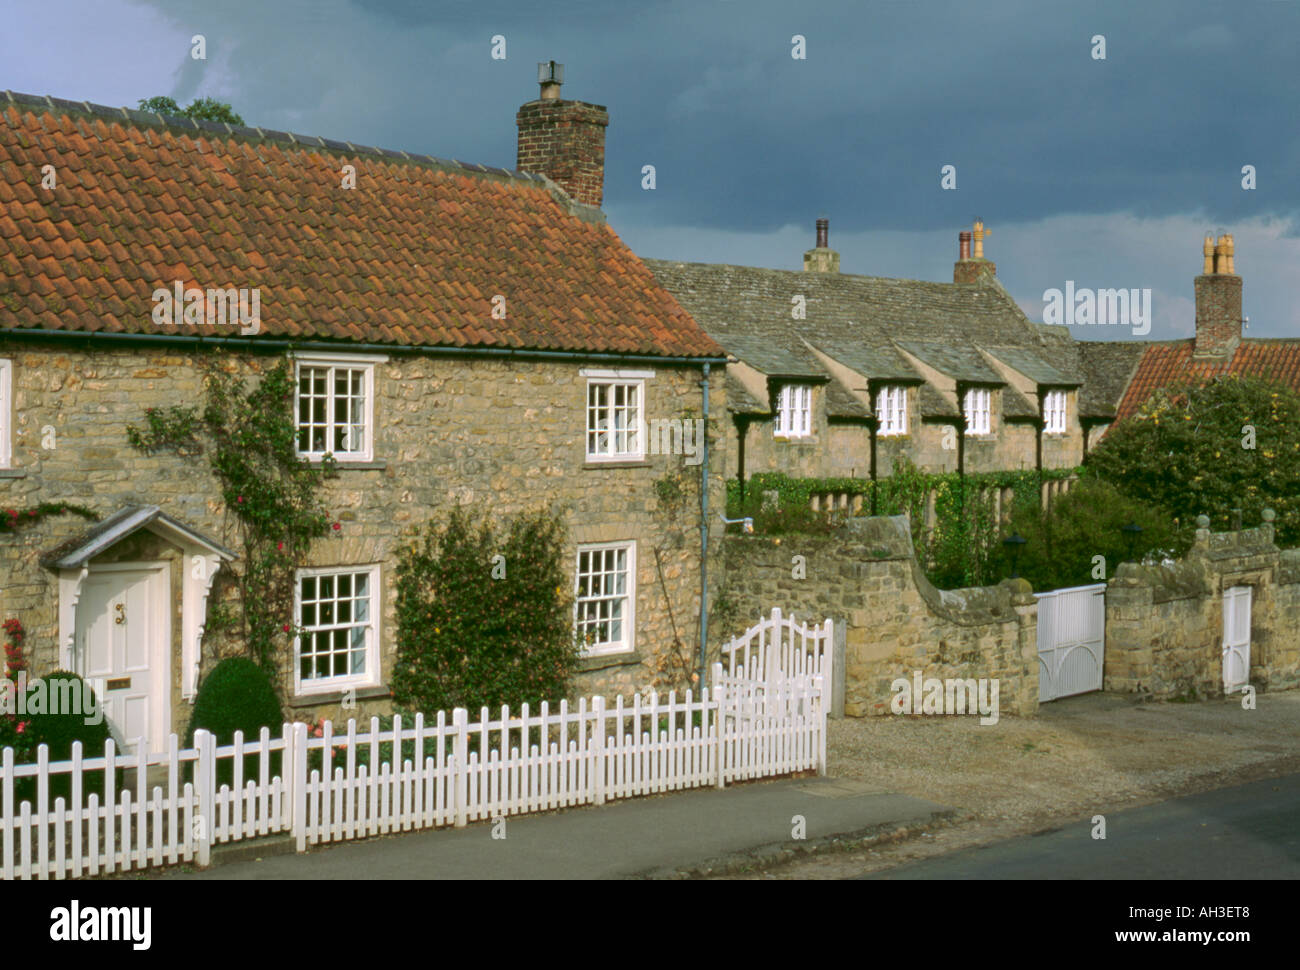 Stone built houses, Coxwold village, North York Moors National Park, North Yorkshire, England, UK. Stock Photo